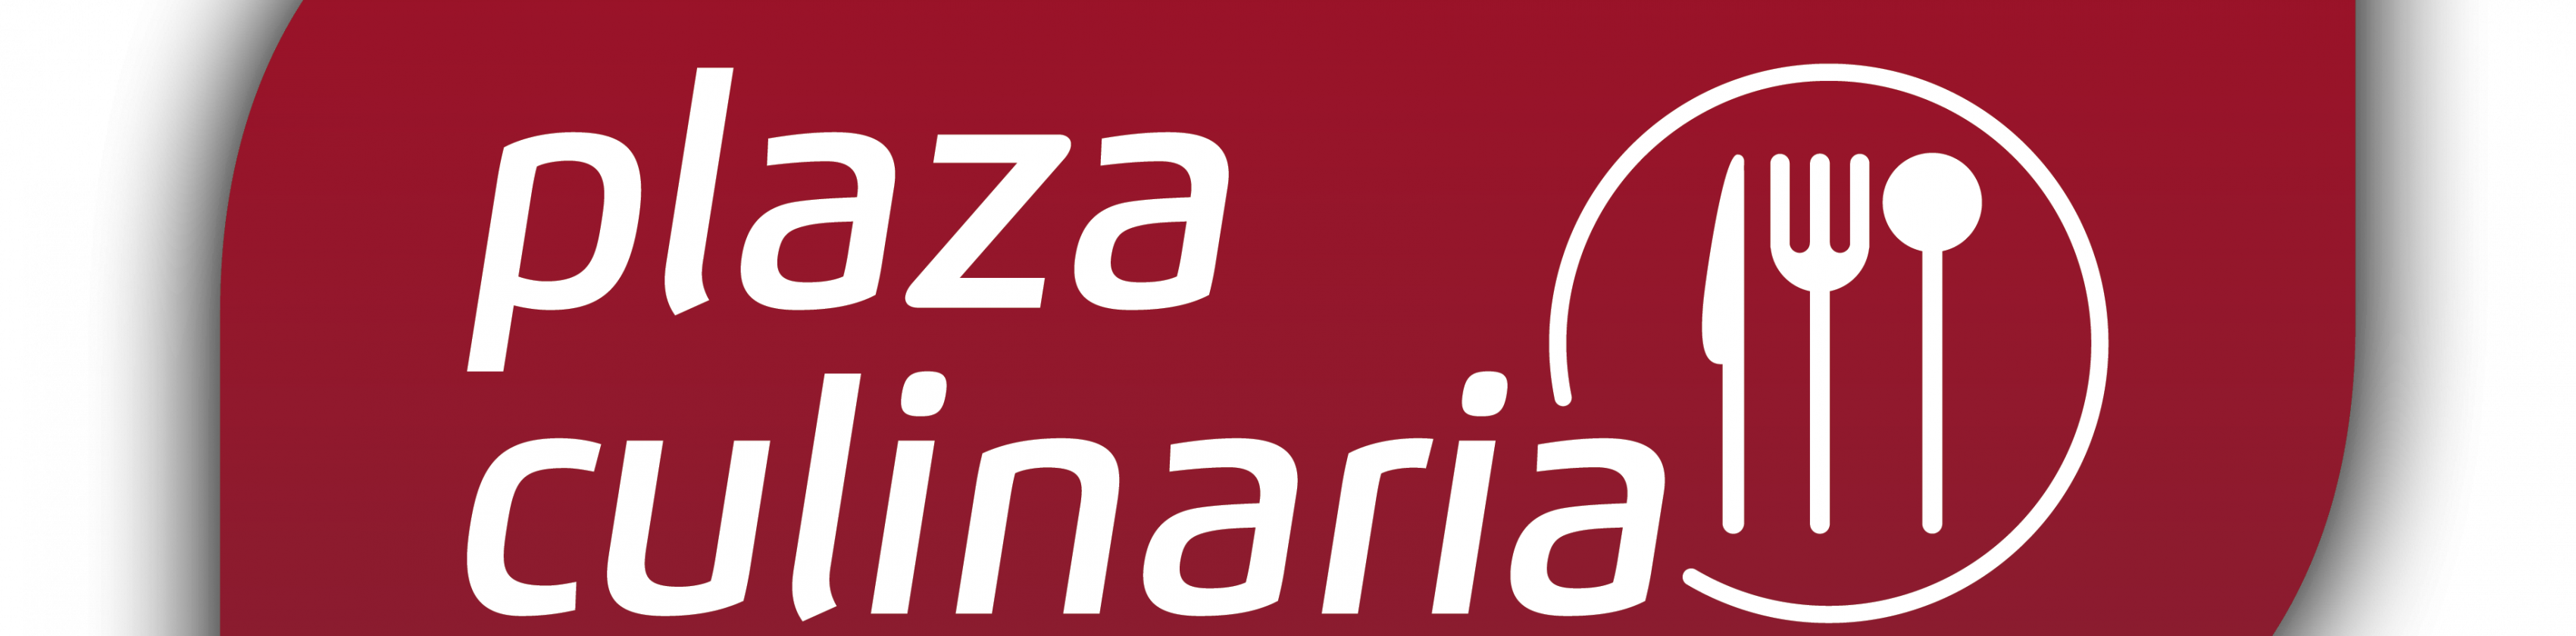 Logo Plaza Culinaria, © Plaza Culinaria